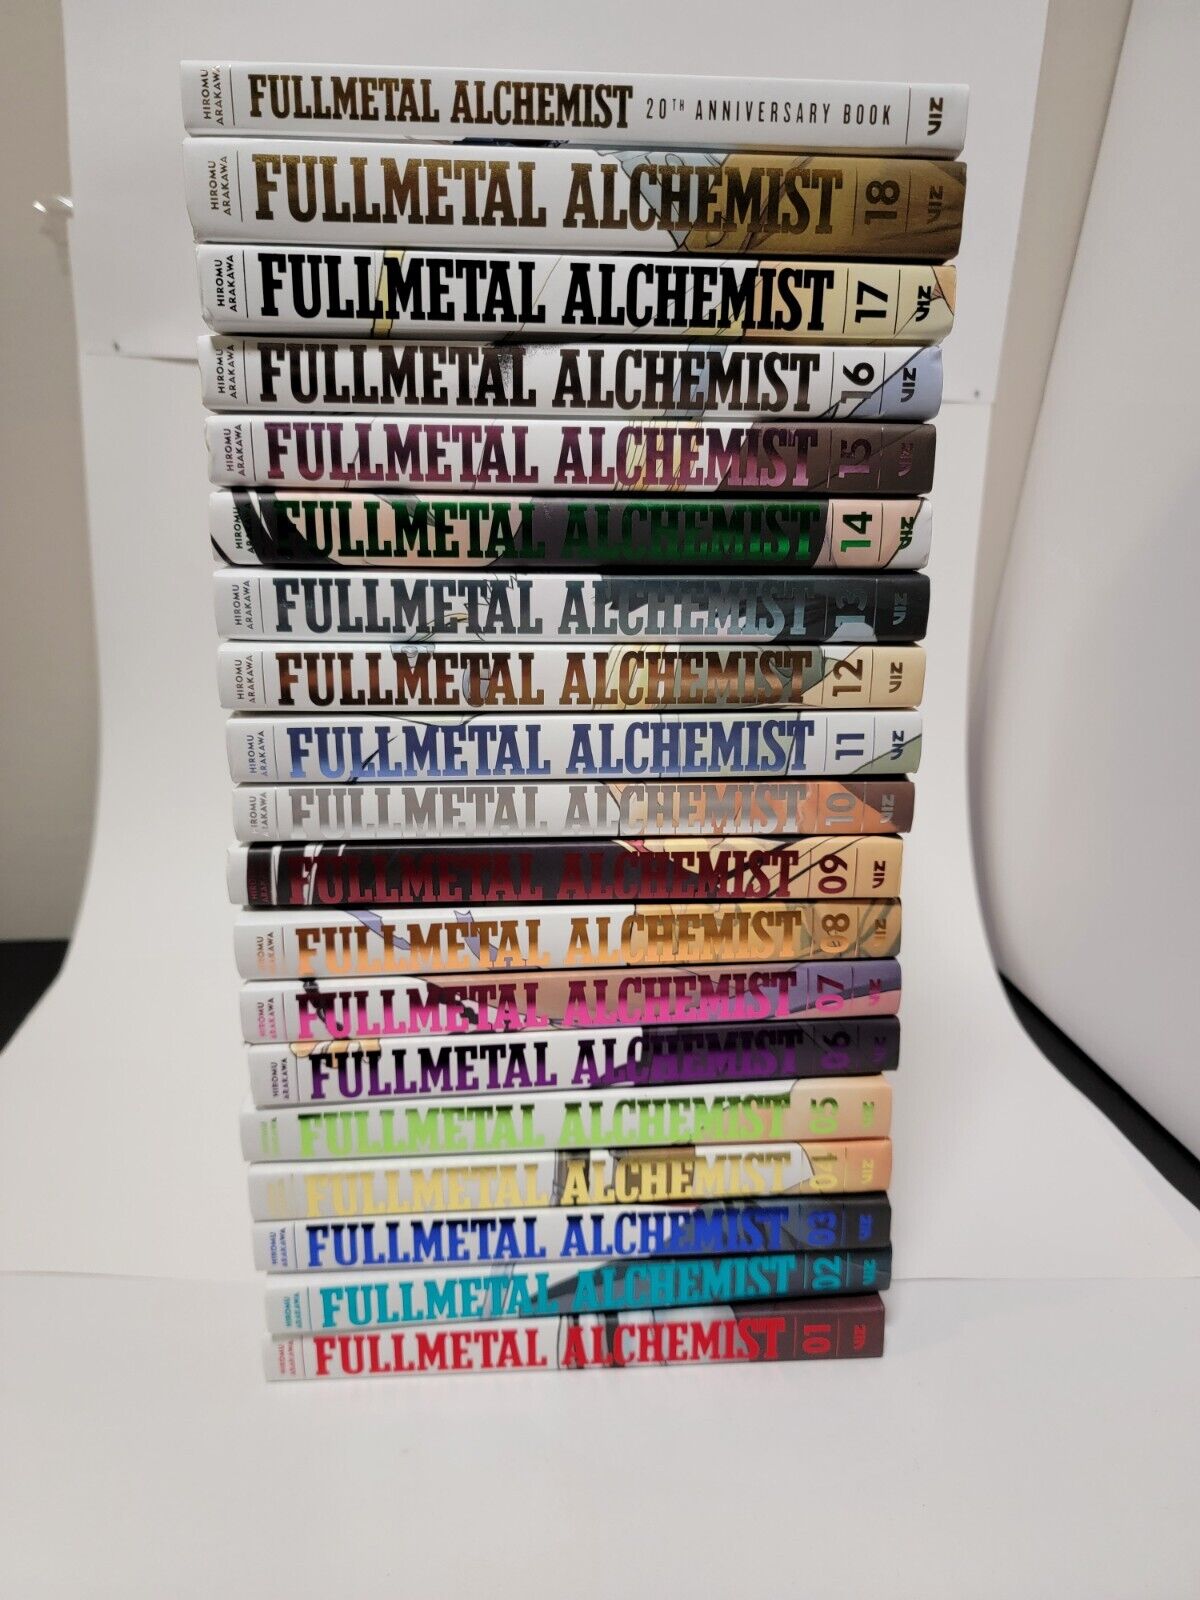 Full metal alchemist fullmetal edition complete hardcover set 1-18 + 20th anniv